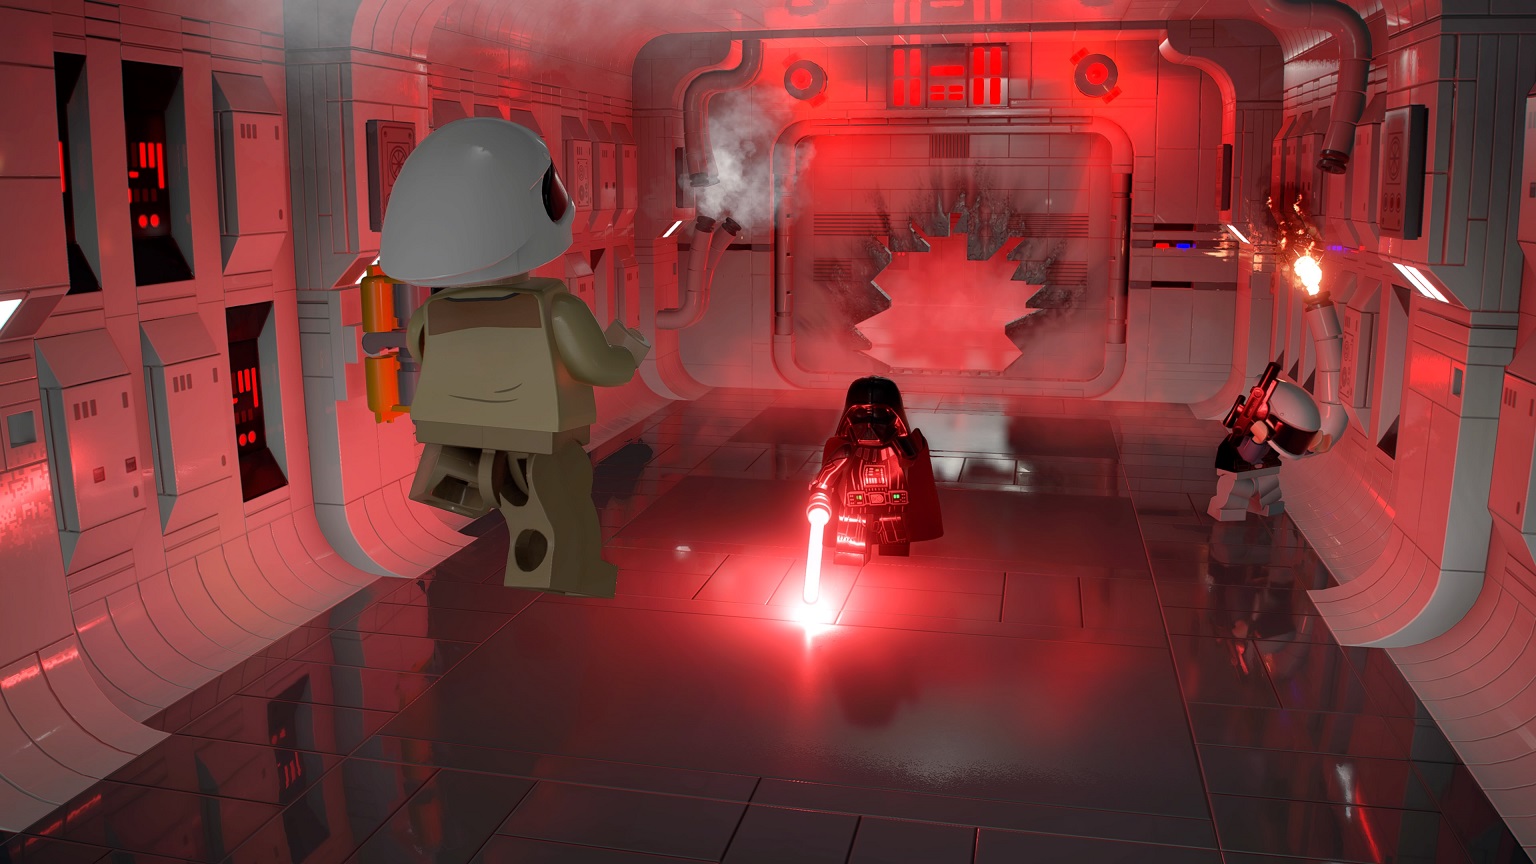 TEST PS5 LEGO Star Wars : La Saga Skywalker, l'apothéose de la licence ? lageekroom